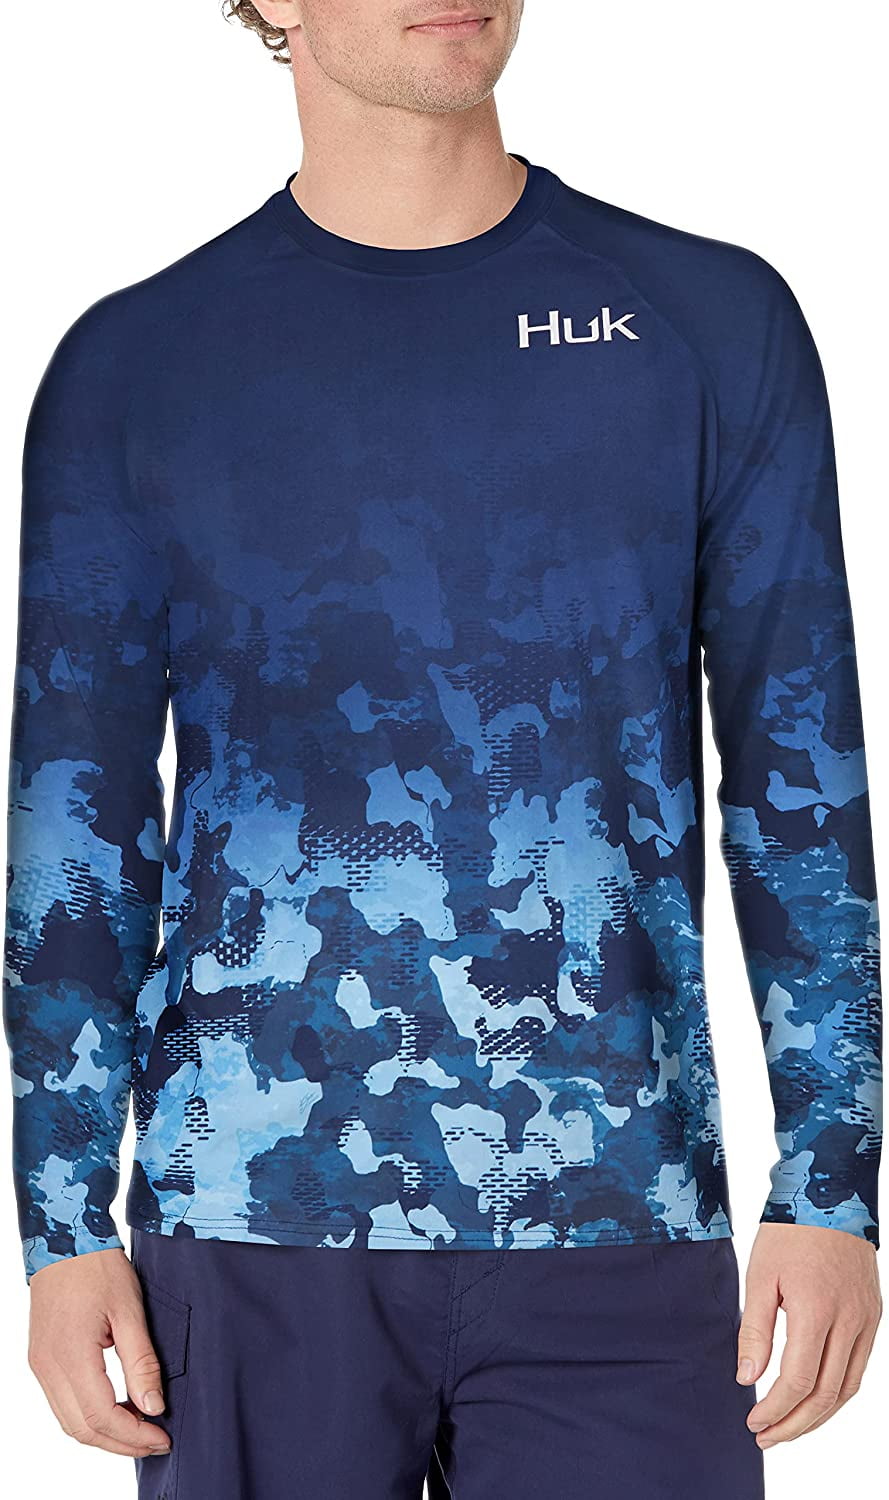 Huk Men's Icon X Performance Long Sleeve Fishing Shirt (Refraction